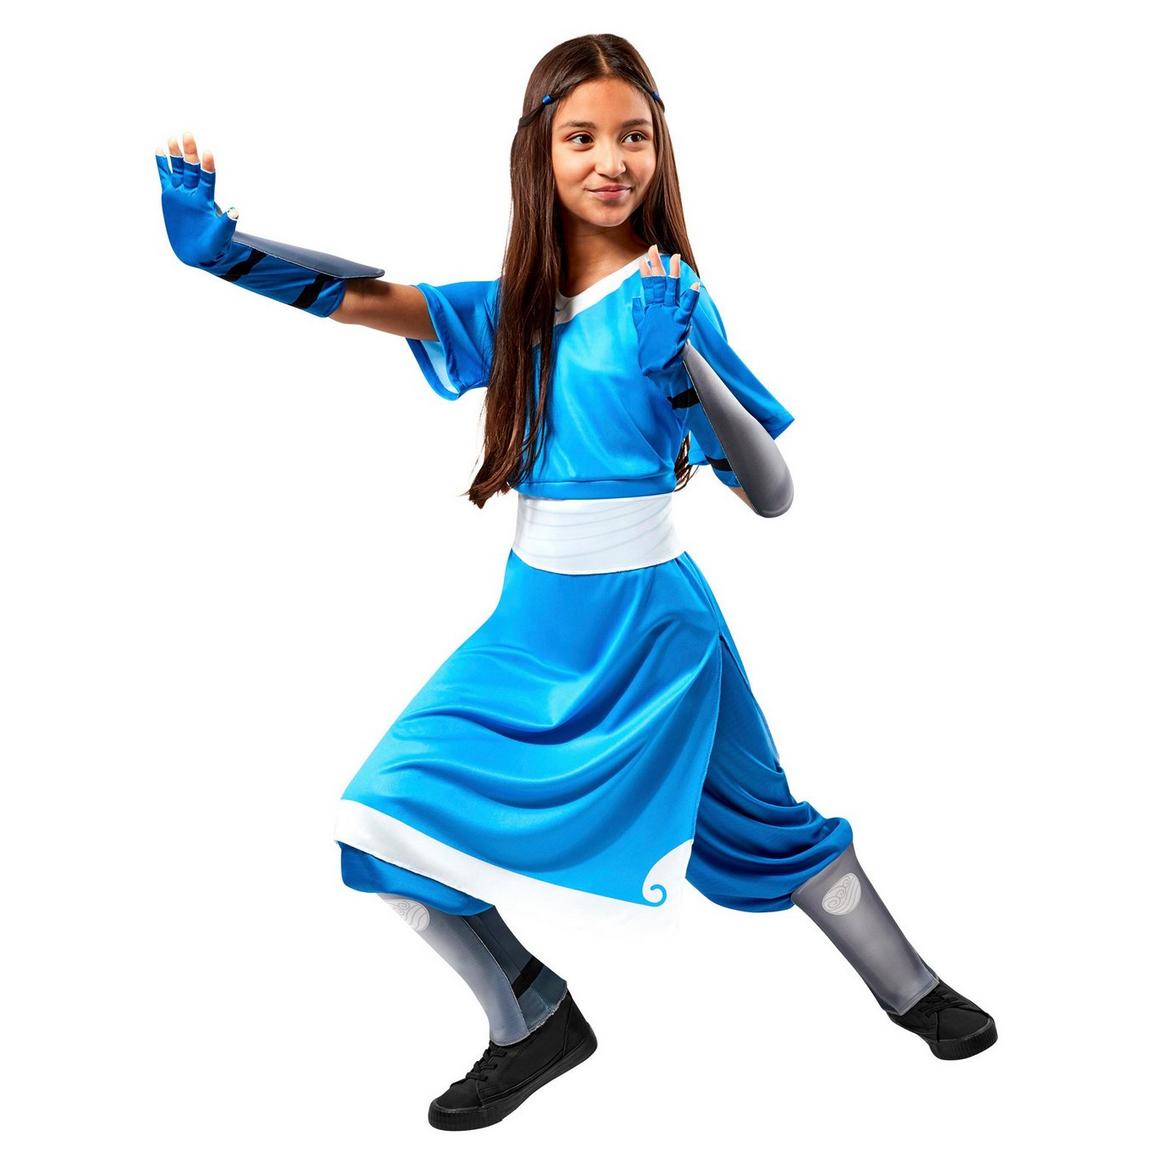 Avatar The Legend of Korra: Katara Child Costume, Size: Small, Rubie's Costume Company